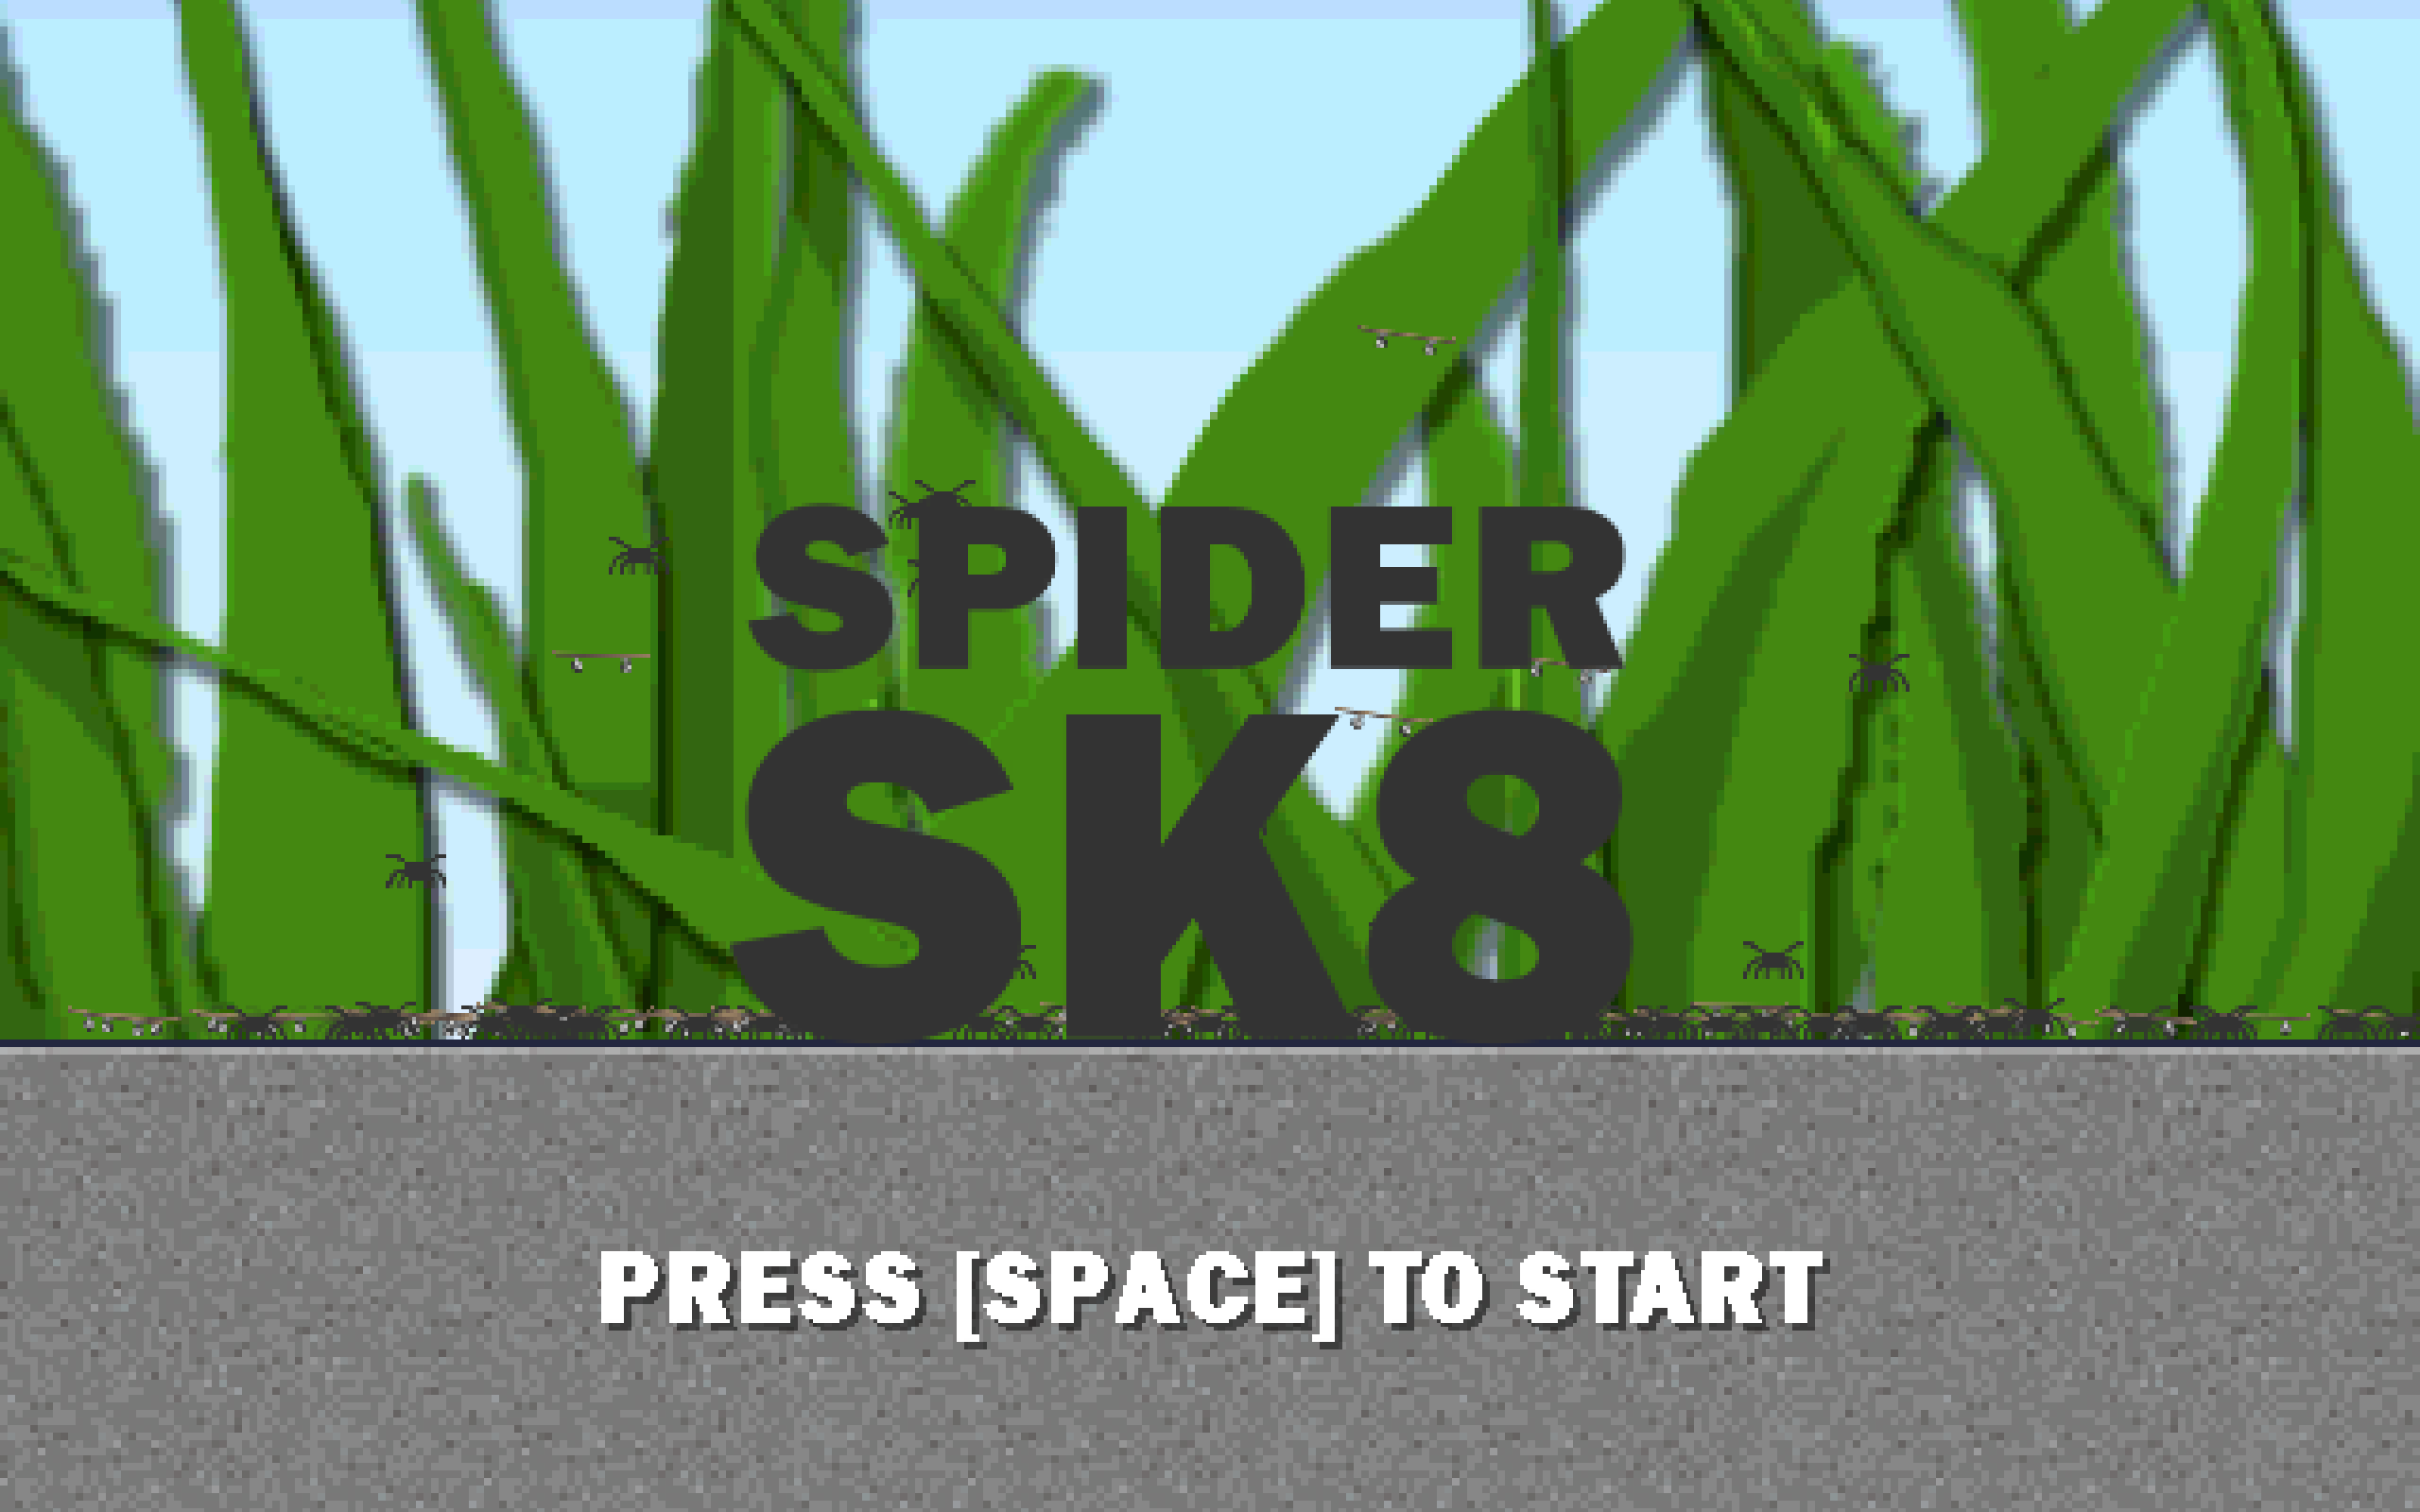 SPIDER SK8 (tech demo)